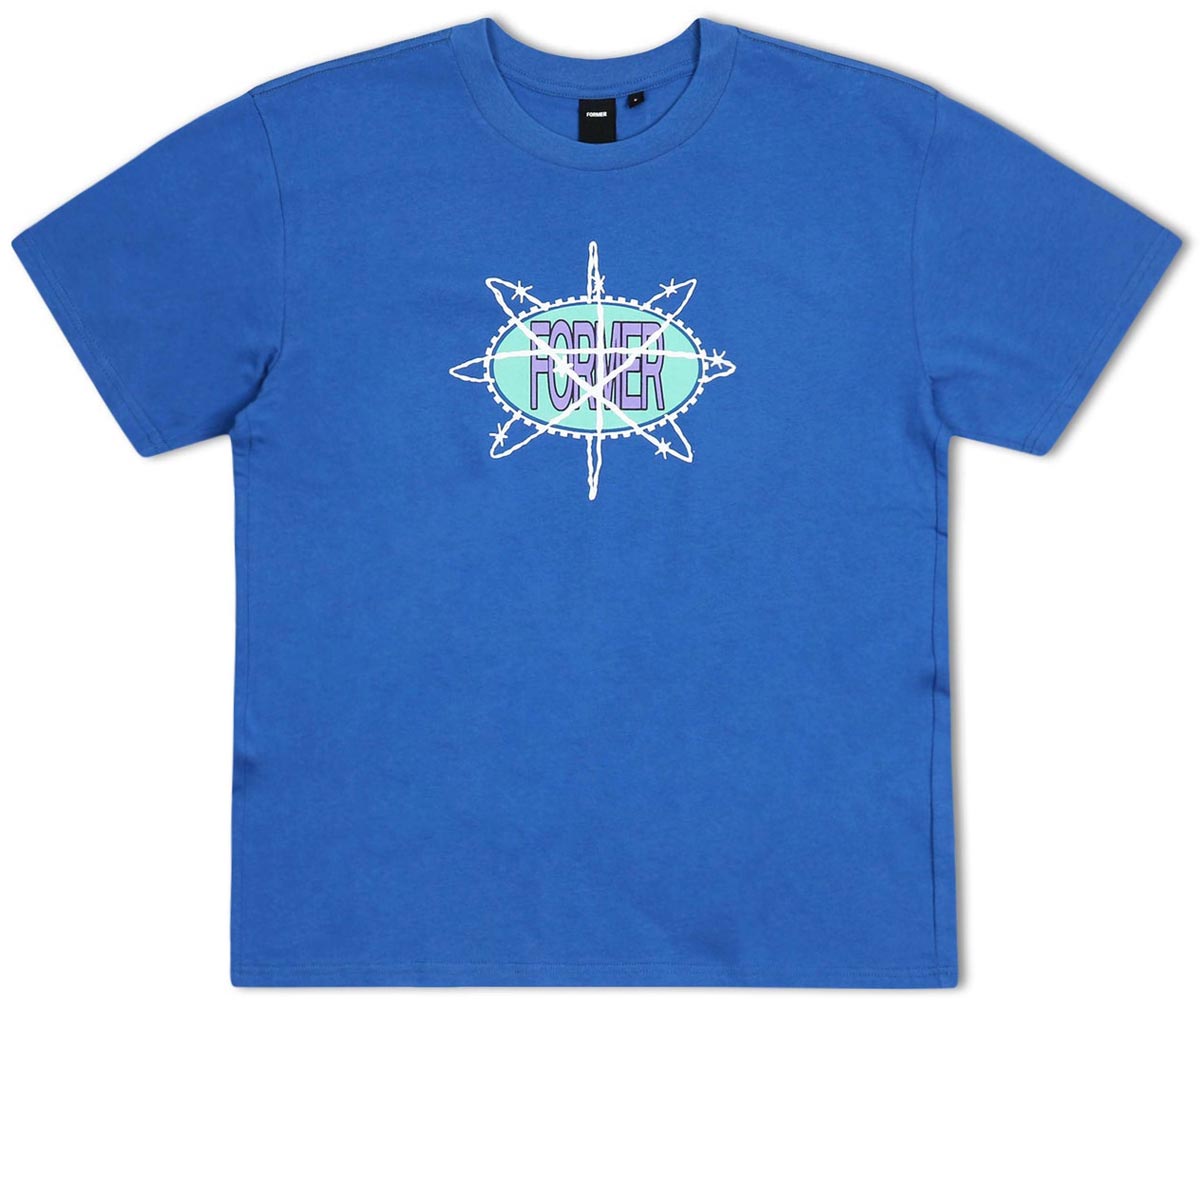 Former Utopic T-Shirt - Cobalt image 1